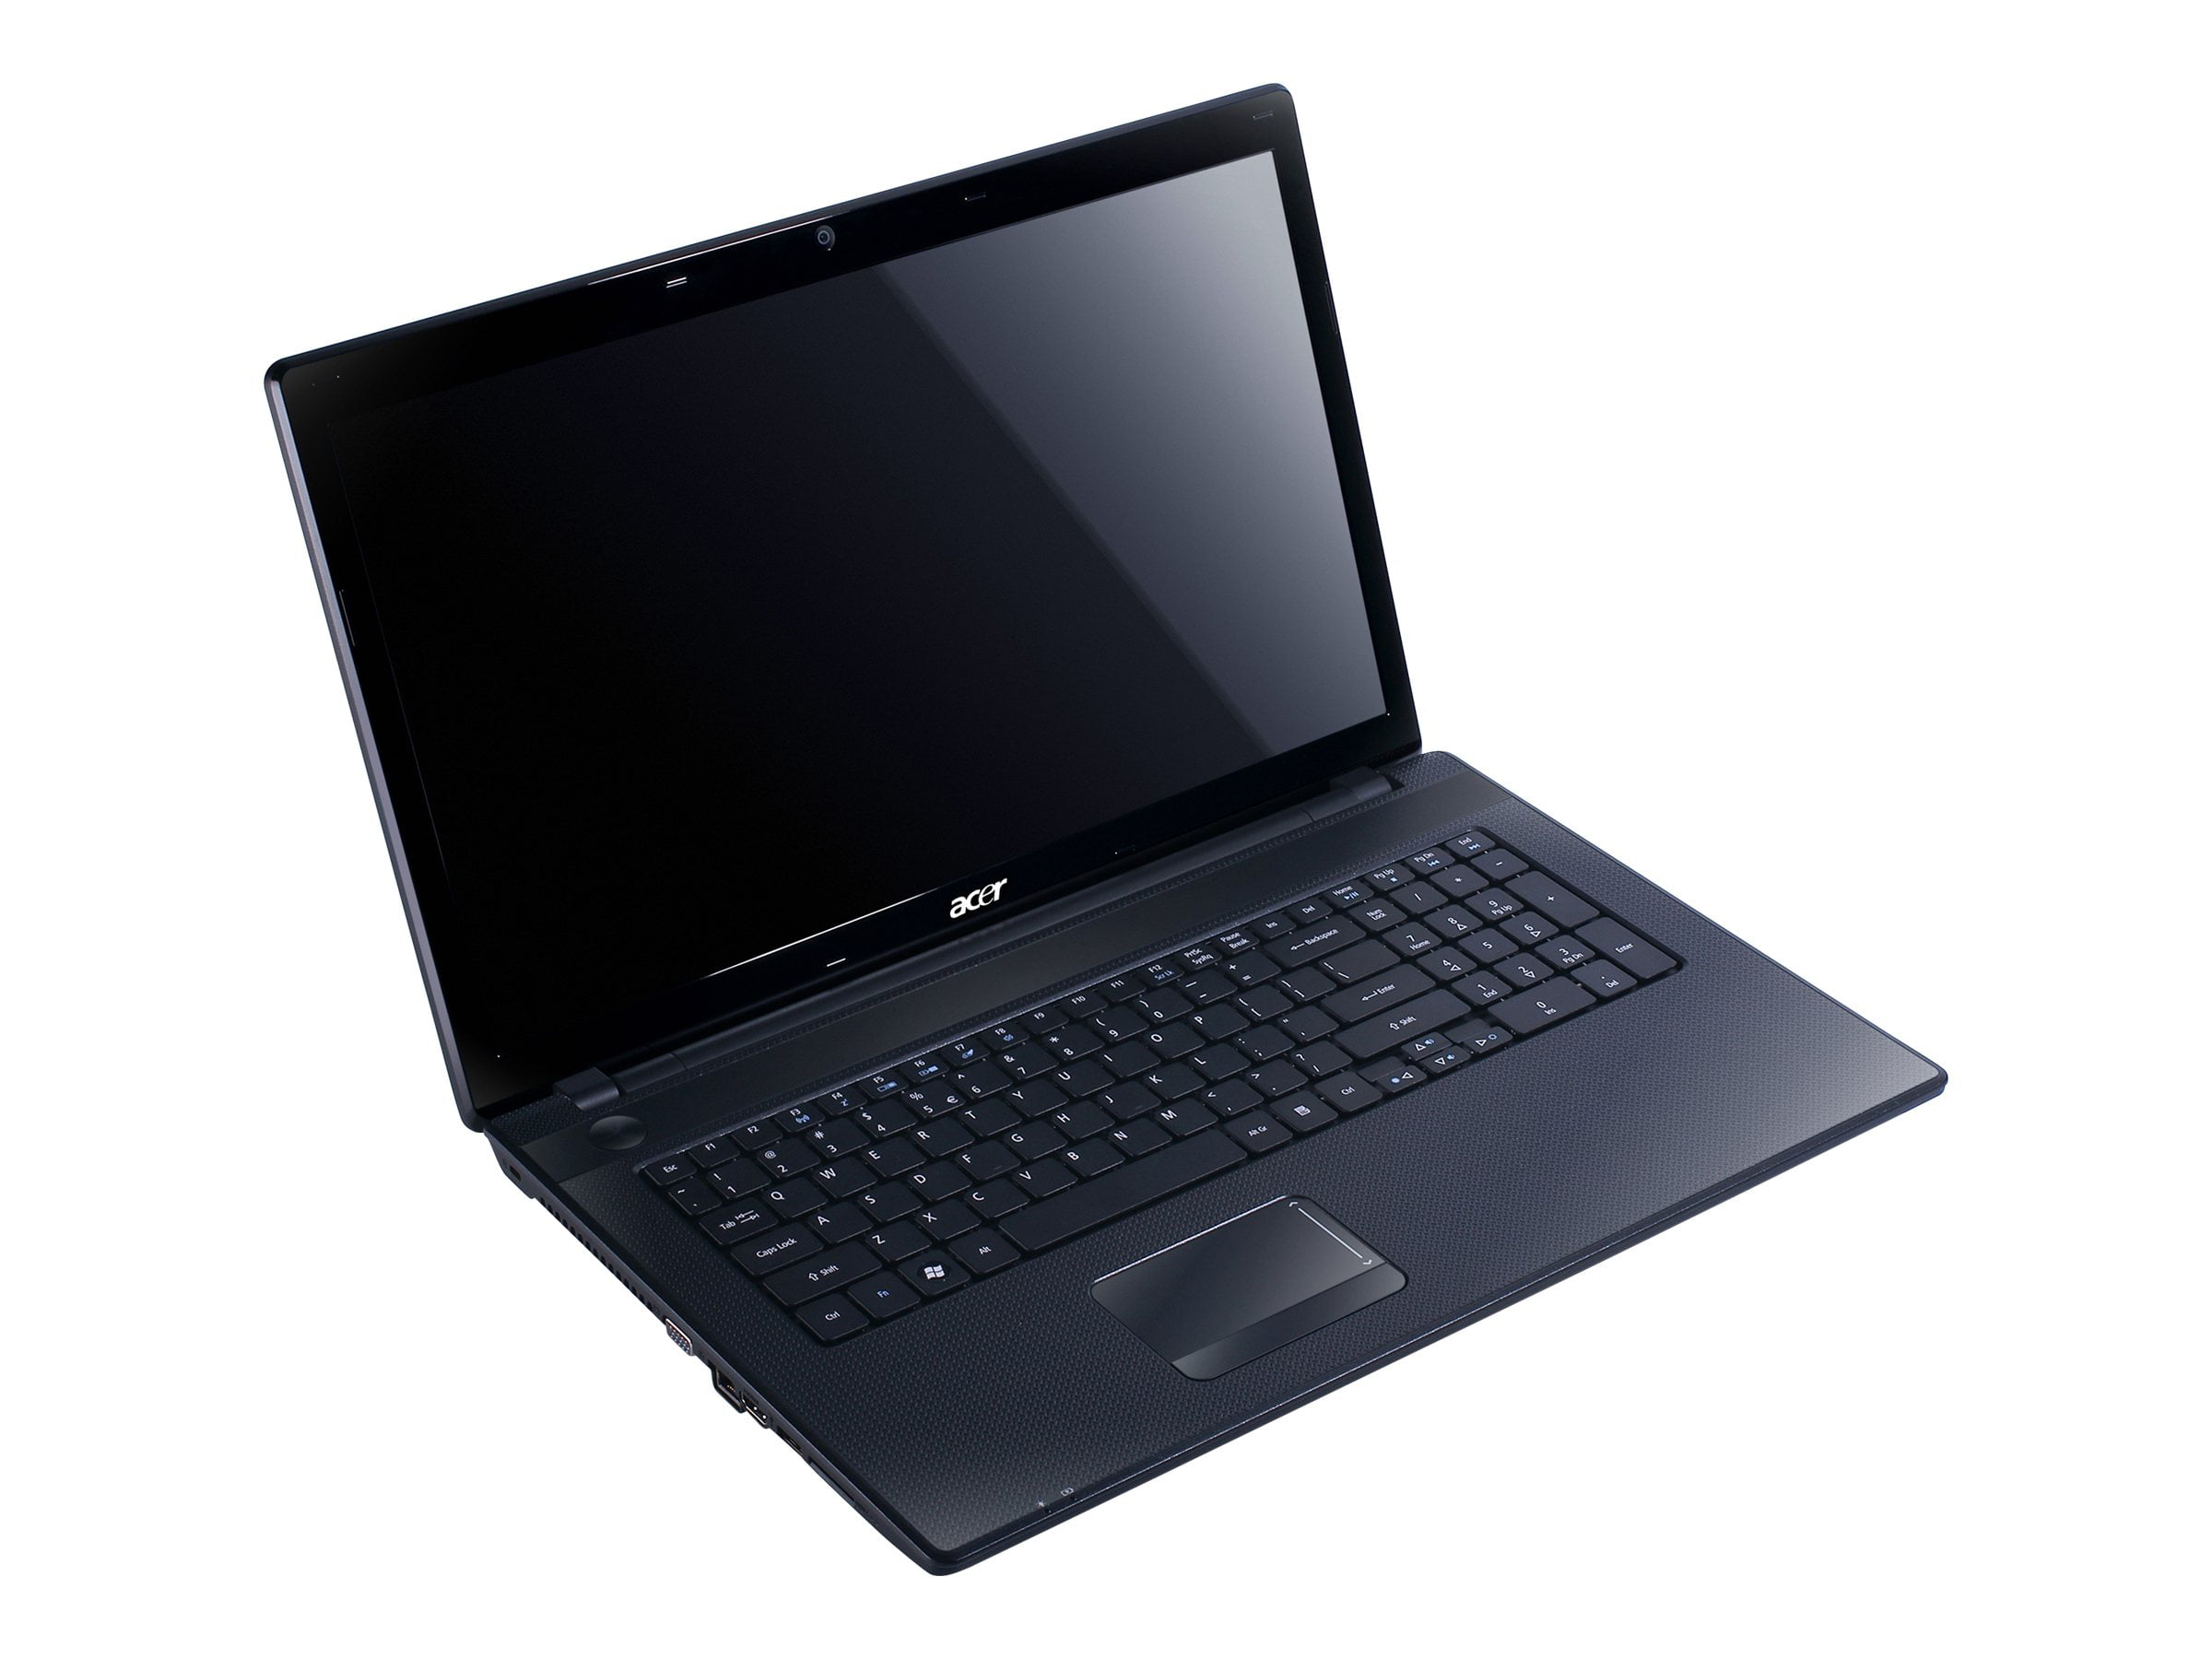 Ноутбук emachines d732zg-p612g25mikk. Acer Aspire 7739. Ноутбук Acer Aspire 5253g-e354g50mnkk. Aspire 7250 e454g50mnkk.